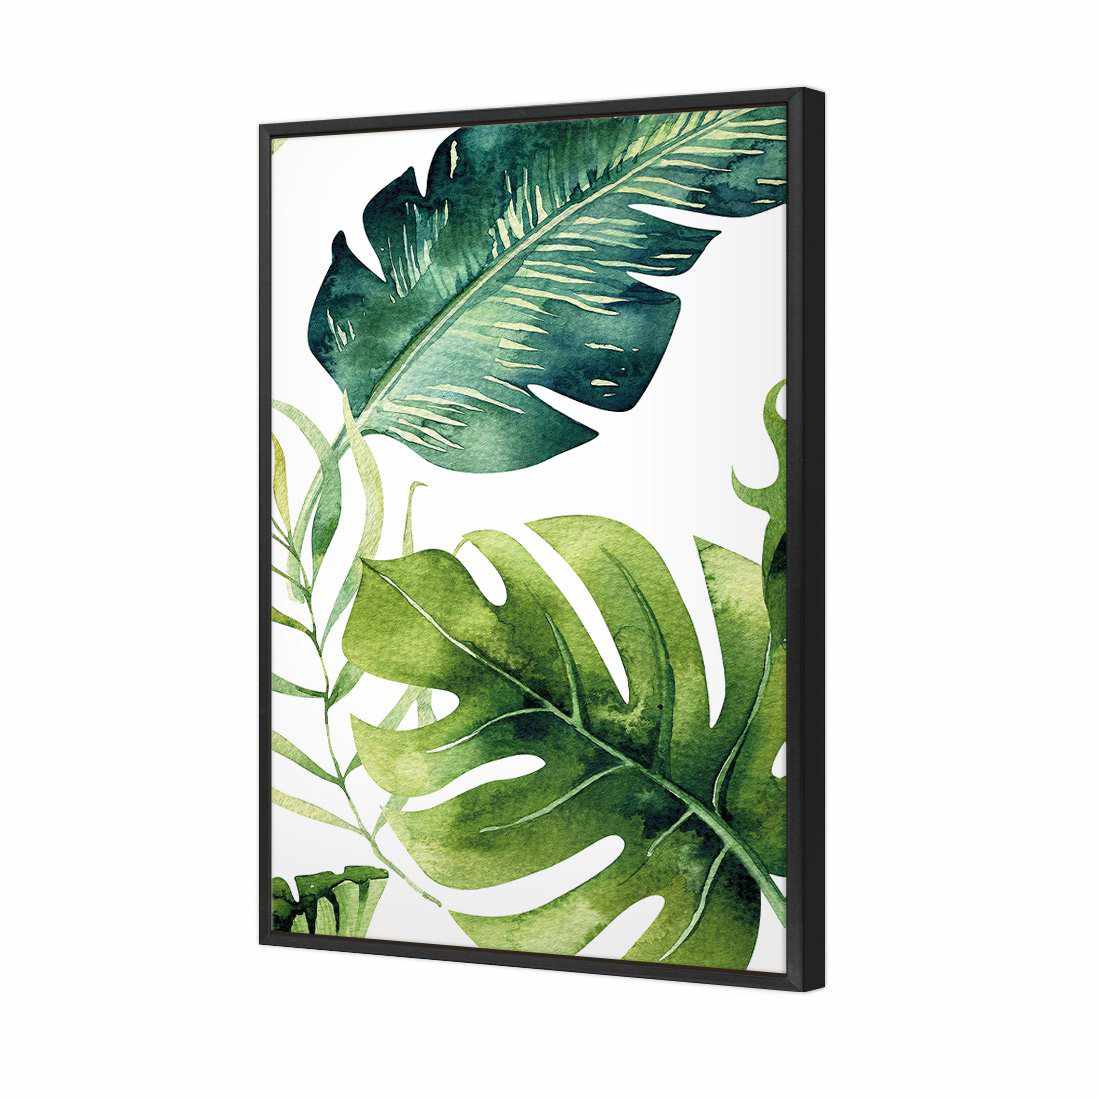 Fascinating Foliage Version 02 Canvas Art-Canvas-Wall Art Designs-45x30cm-Canvas - Black Frame-Wall Art Designs